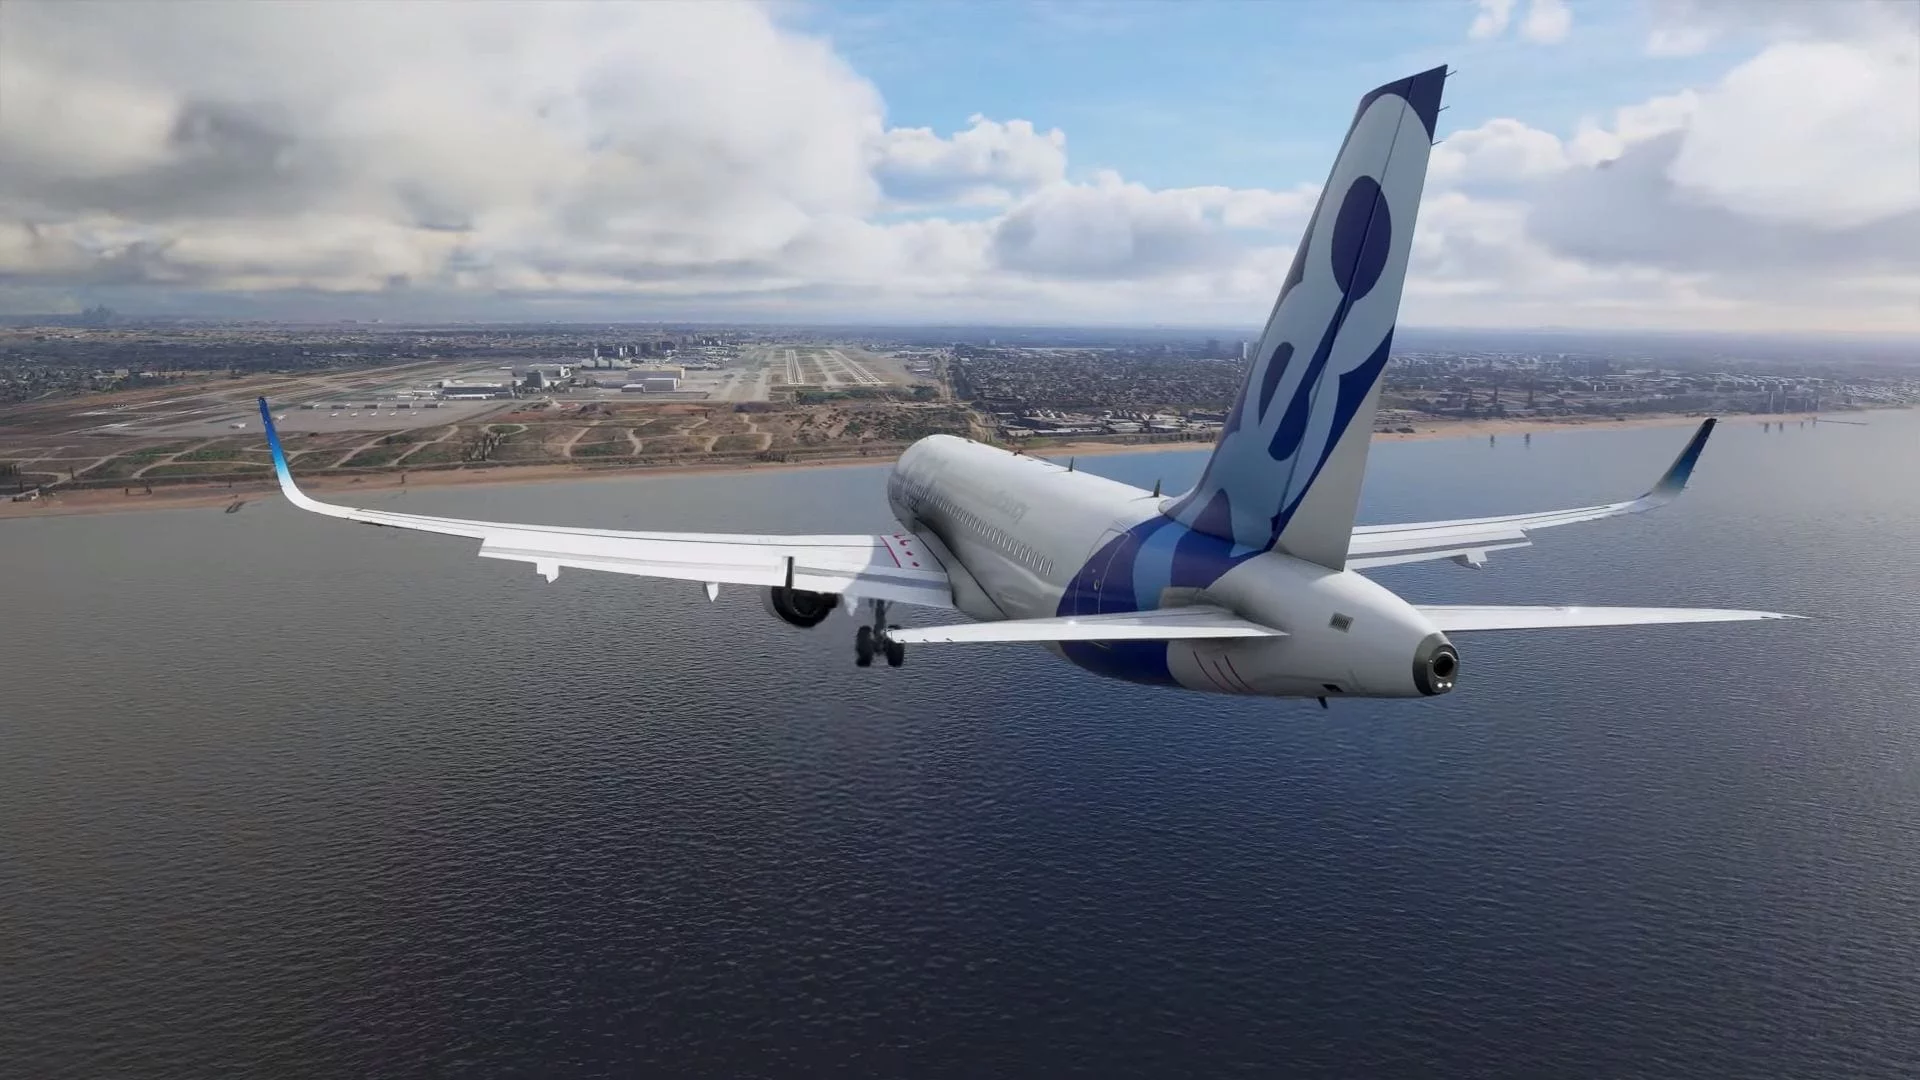 Microsoft Flight Simulator 2020 Looks Stunning In New Gameplay Footage